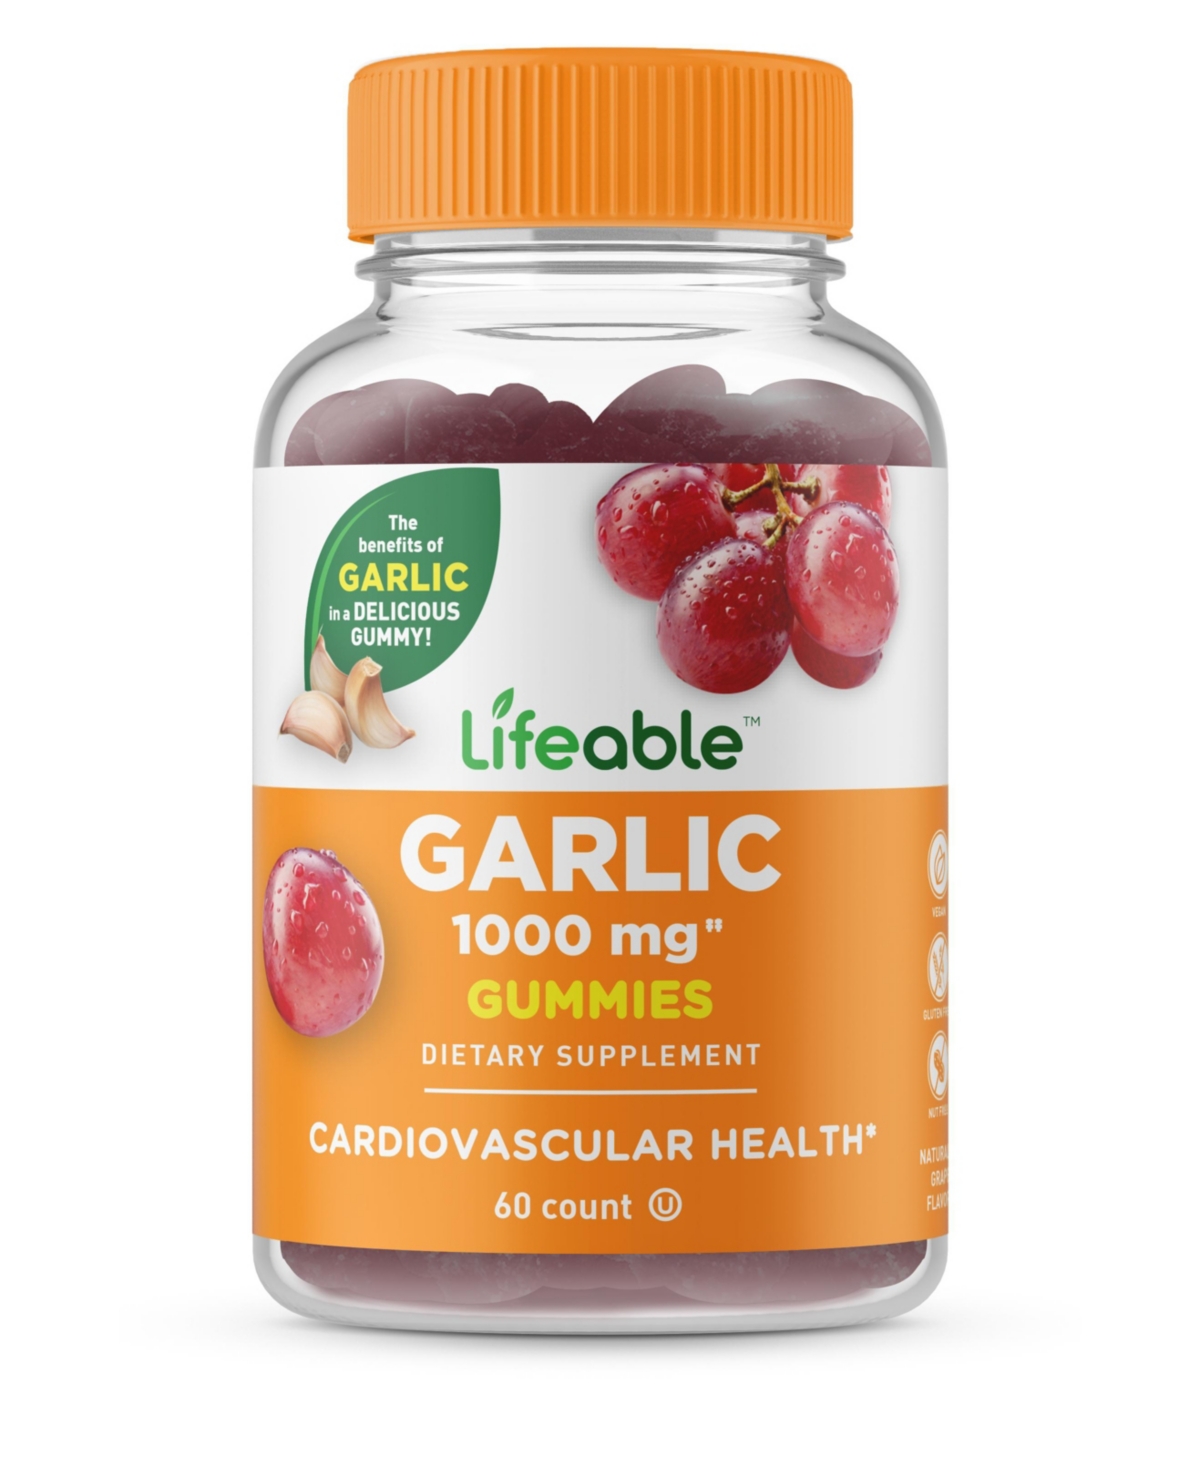 Garlic 1,000 mg Gummies - Cardiovascular Health - Great Tasting Natural Flavor, Dietary Supplement Vitamins - 60 Gummies - Open Miscellaneous